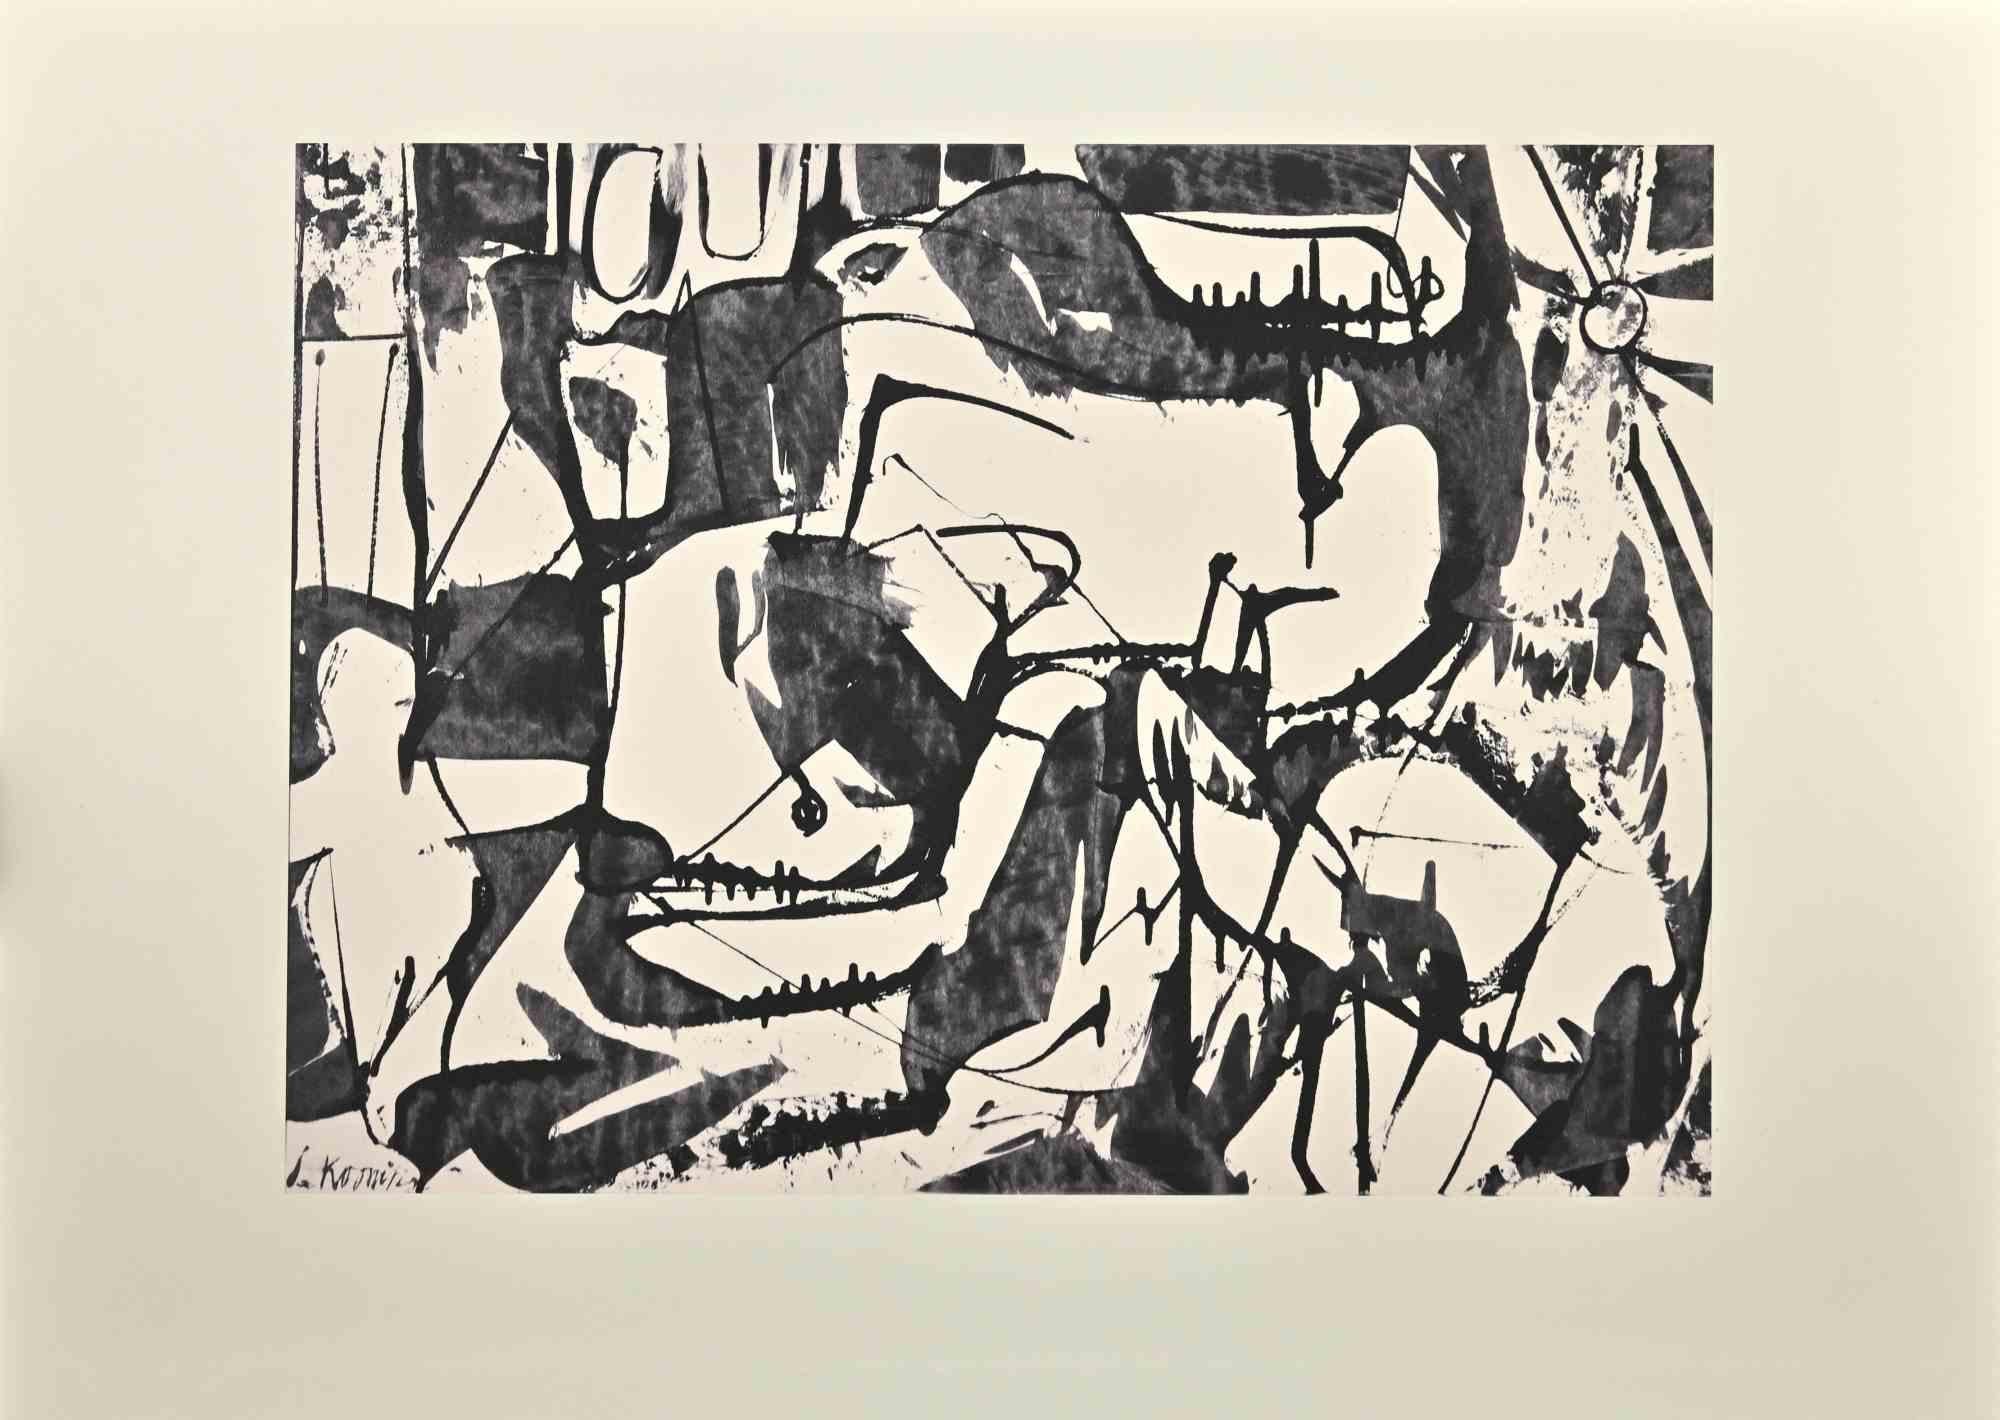 Abstract Print Willem de Kooning - Sans titre - Offset et lithographie d'après Willem De Kooning - 1985